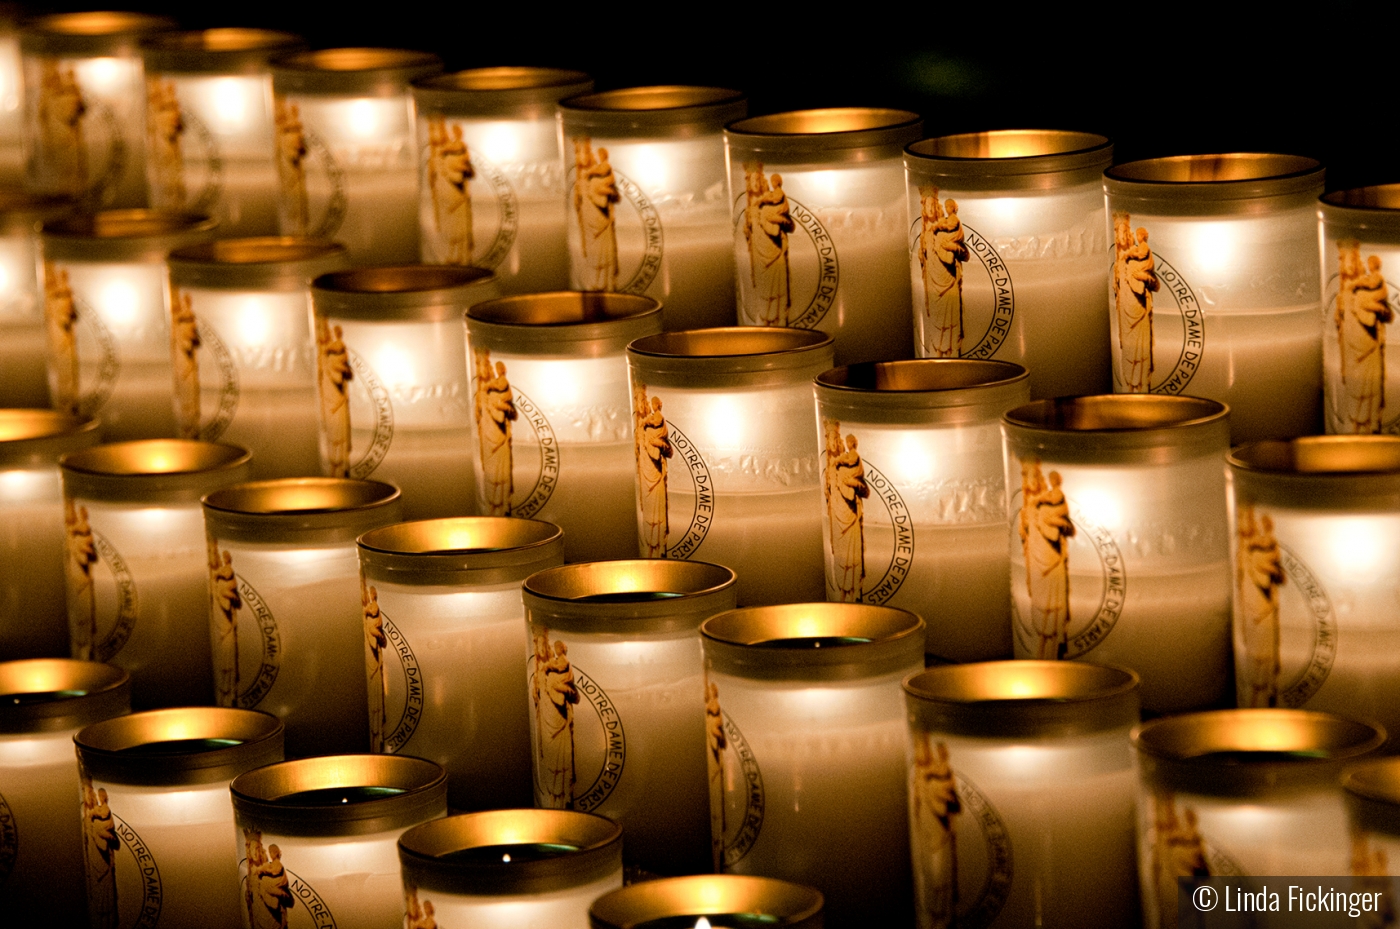 Norte Dame candles by Linda Fickinger